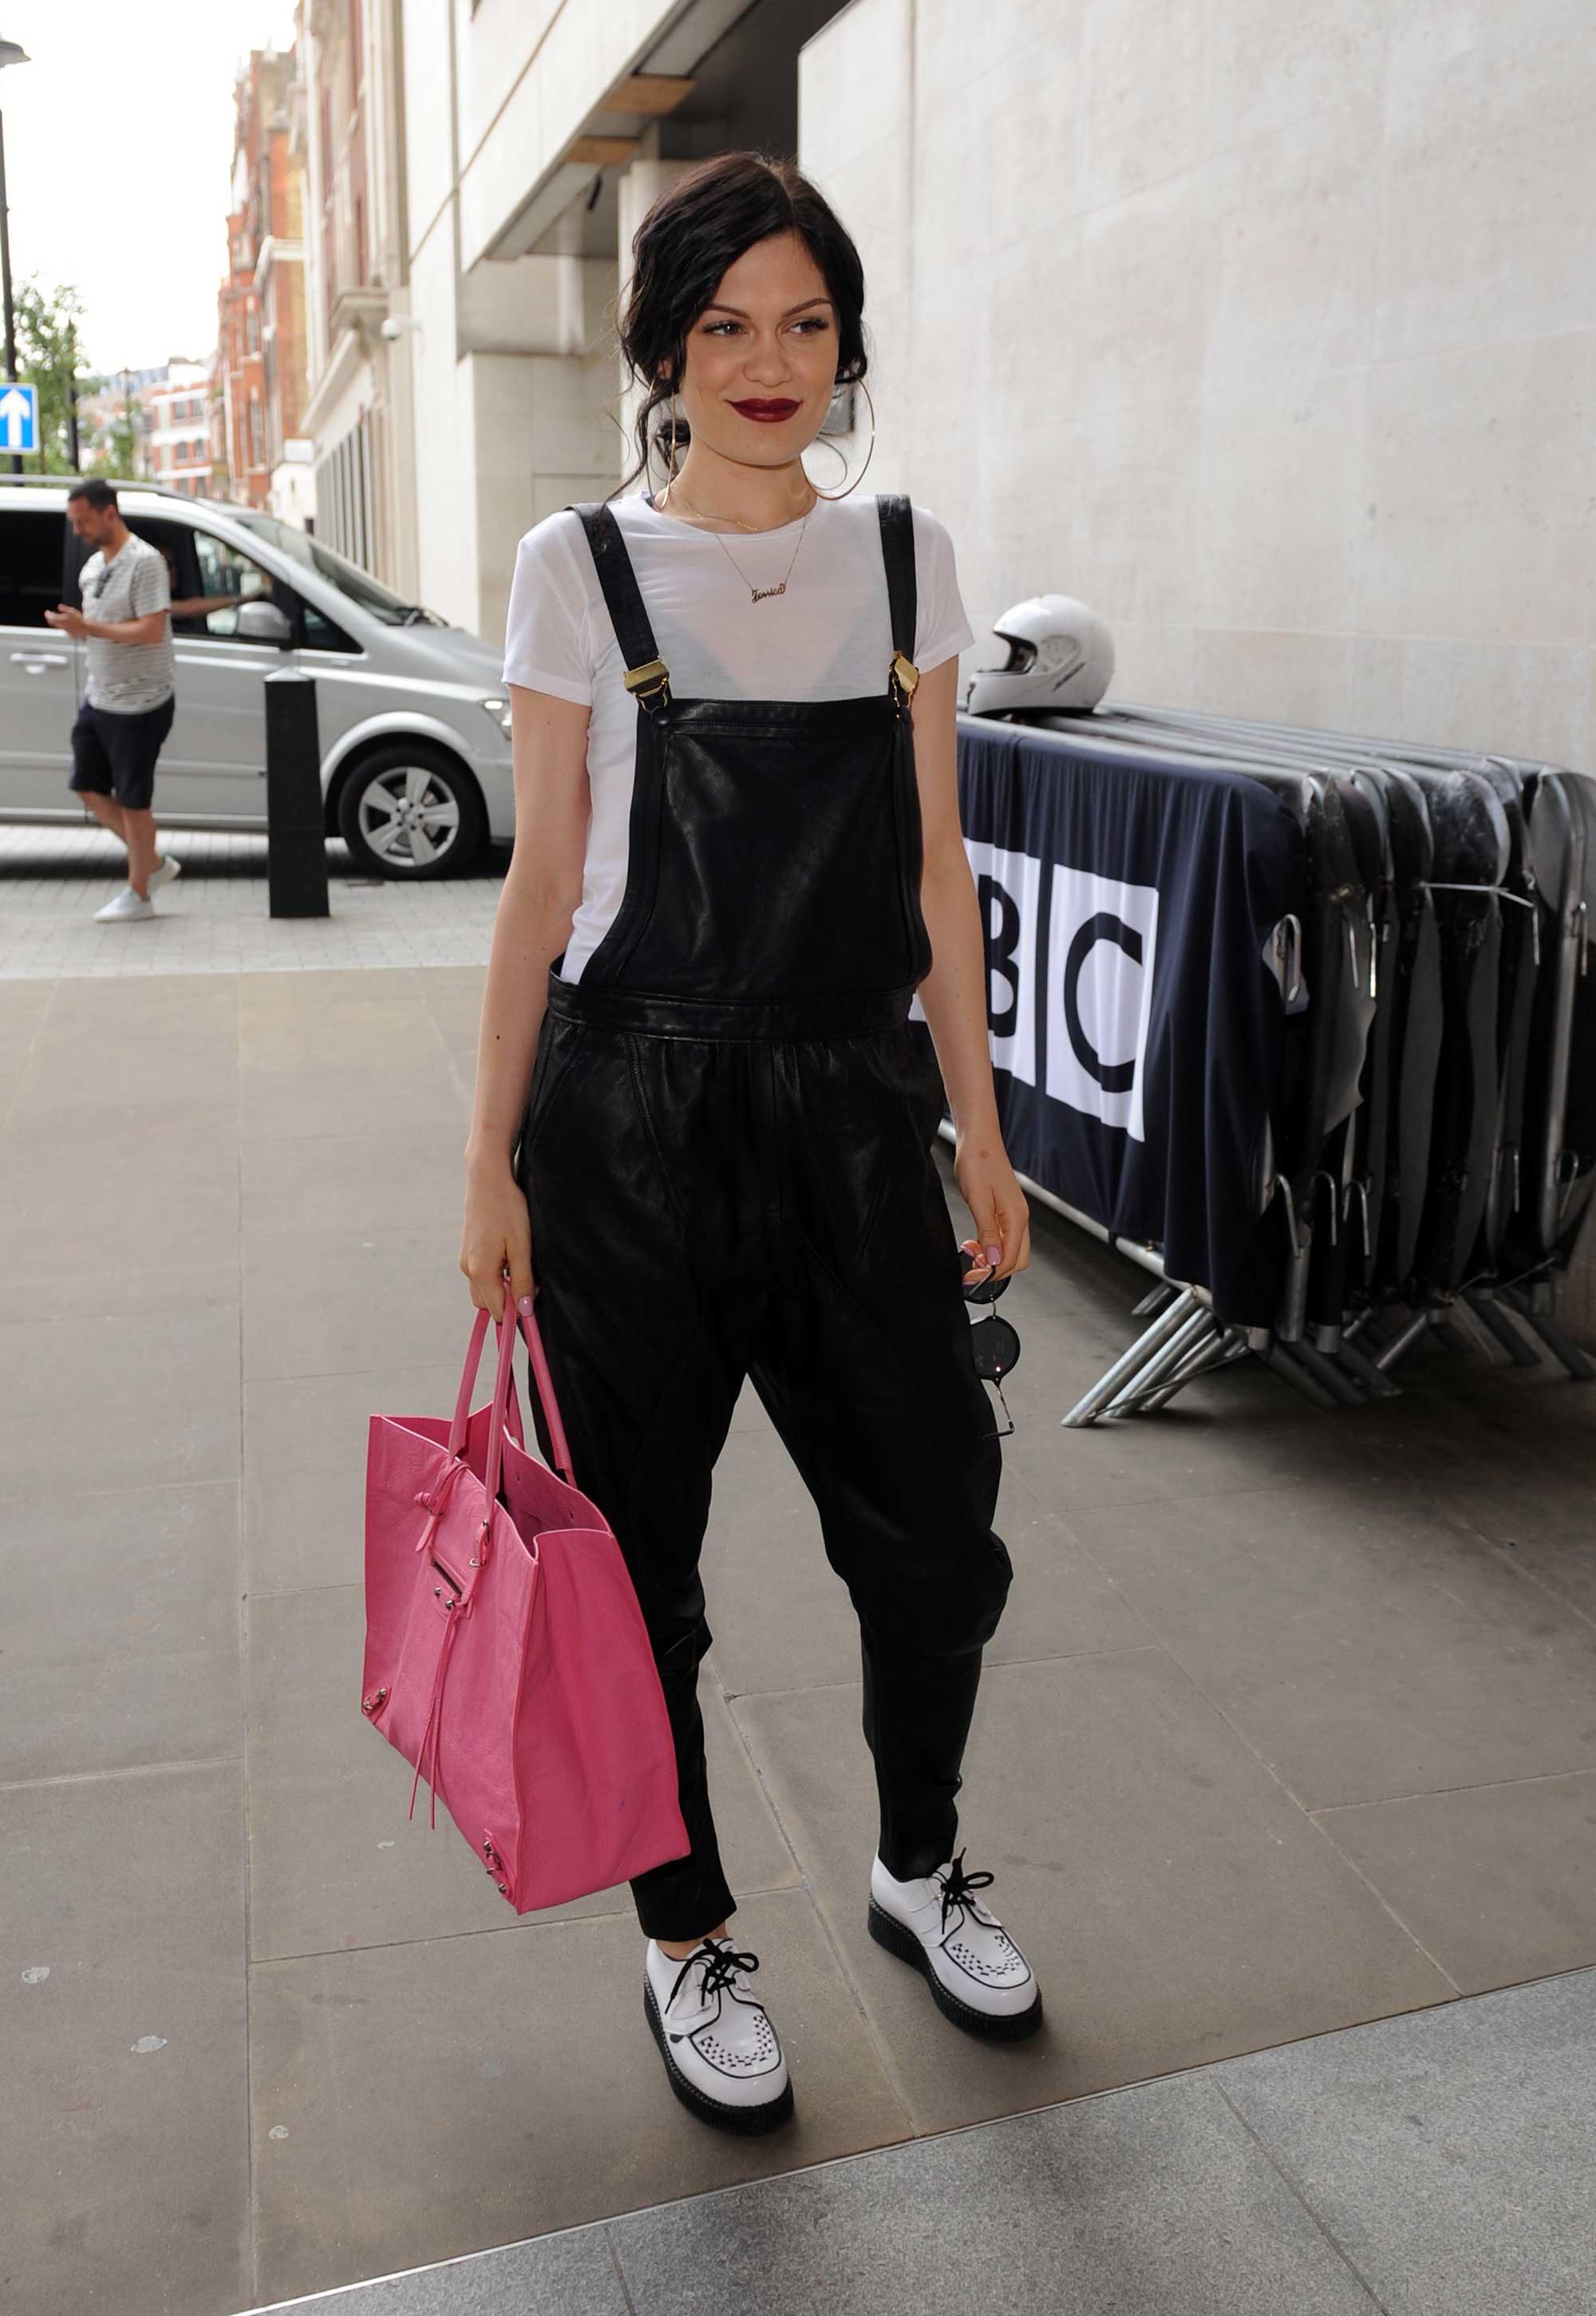 Jessie J at BBC Radio 1 studios in London